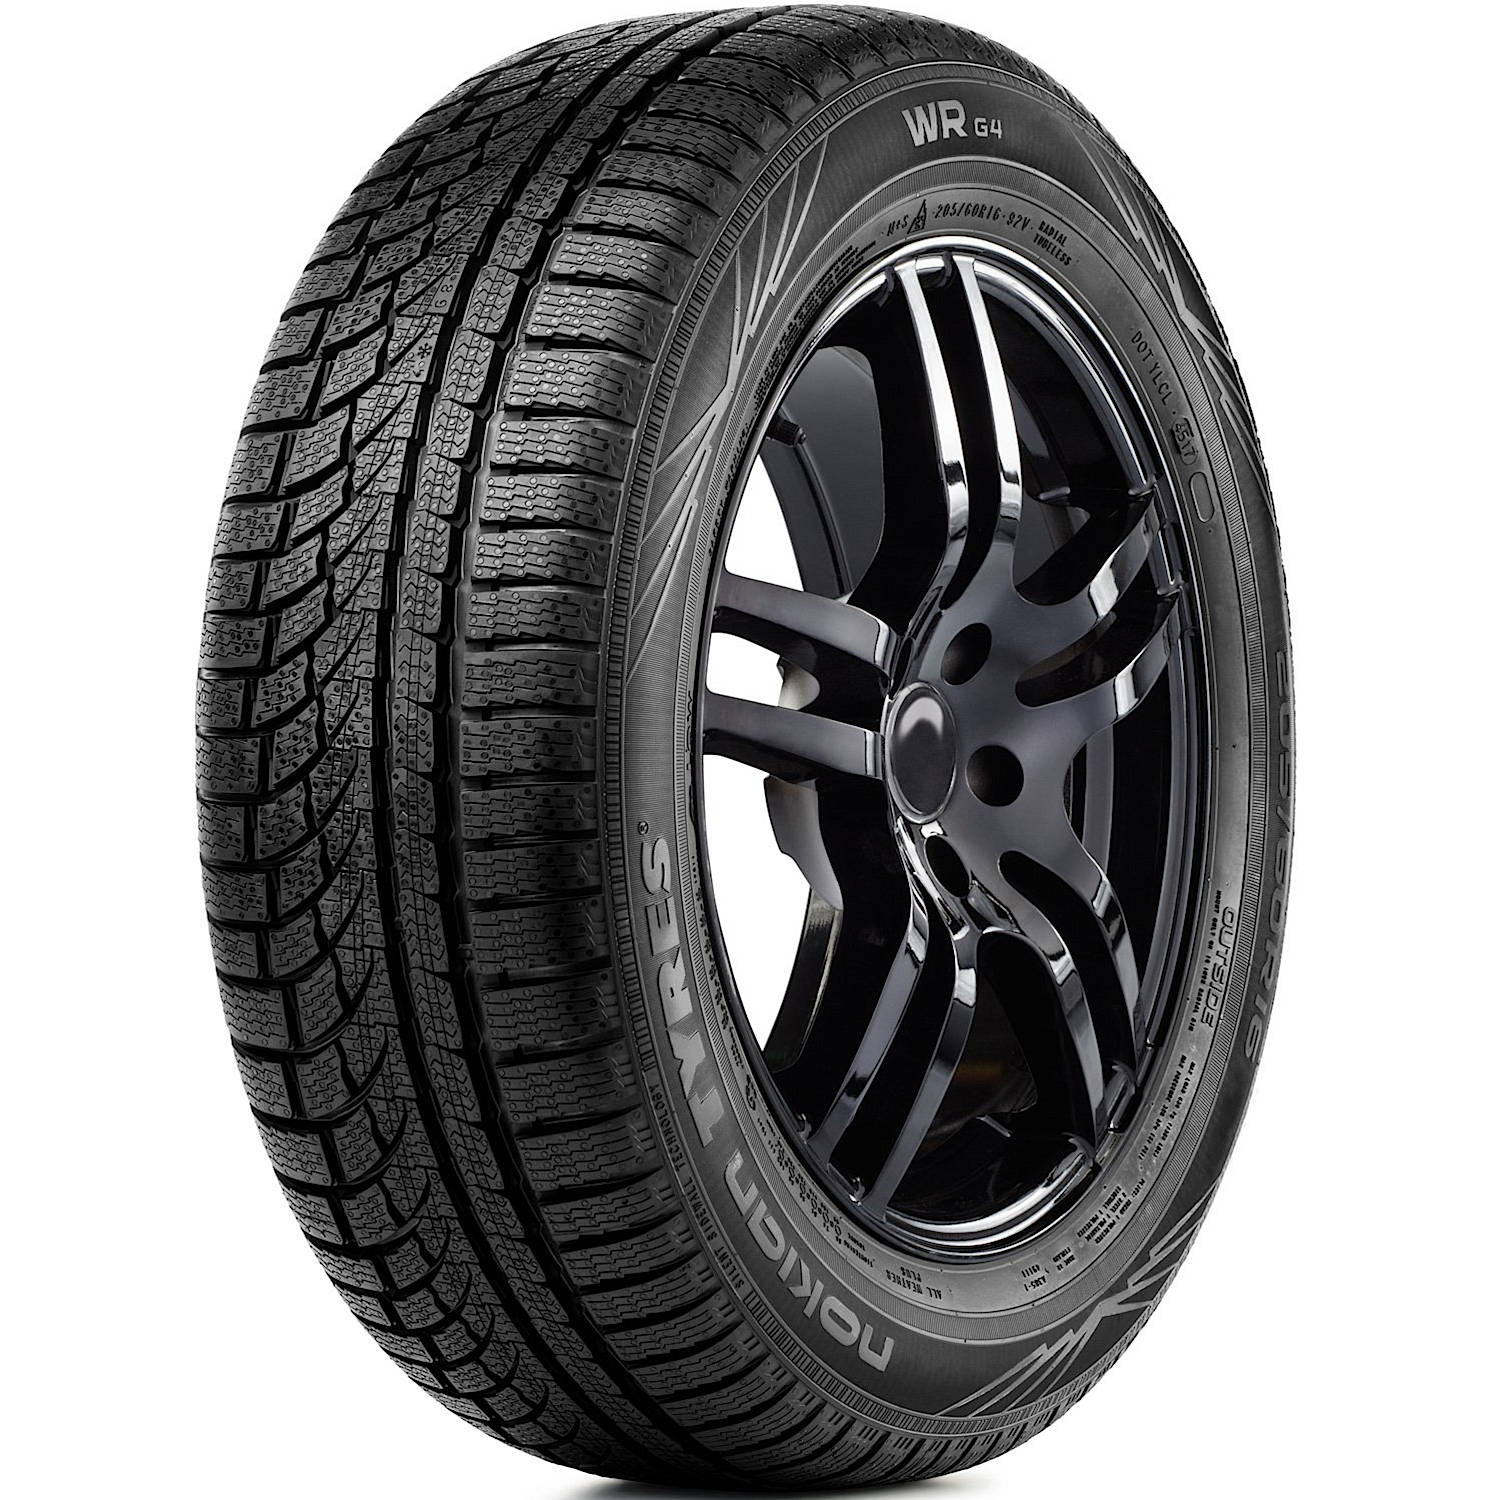 NOKIAN WR G4 225/45R18 (25.9X8.9R 18) Tires